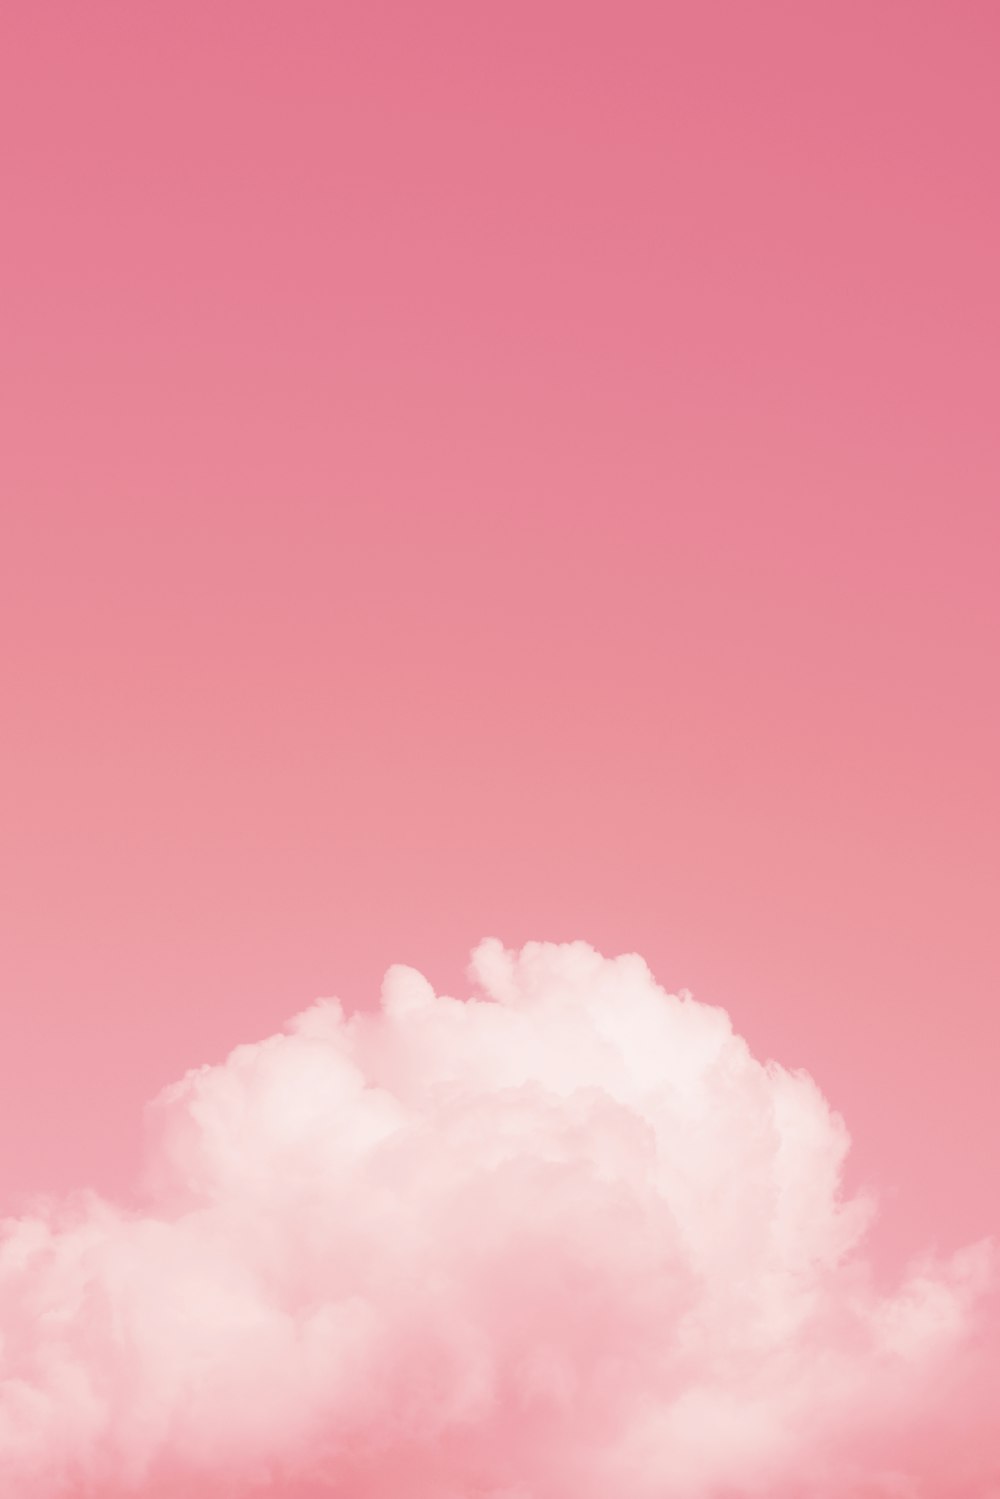 Pink Wallpapers: Free HD Download [500+ HQ] | Unsplash